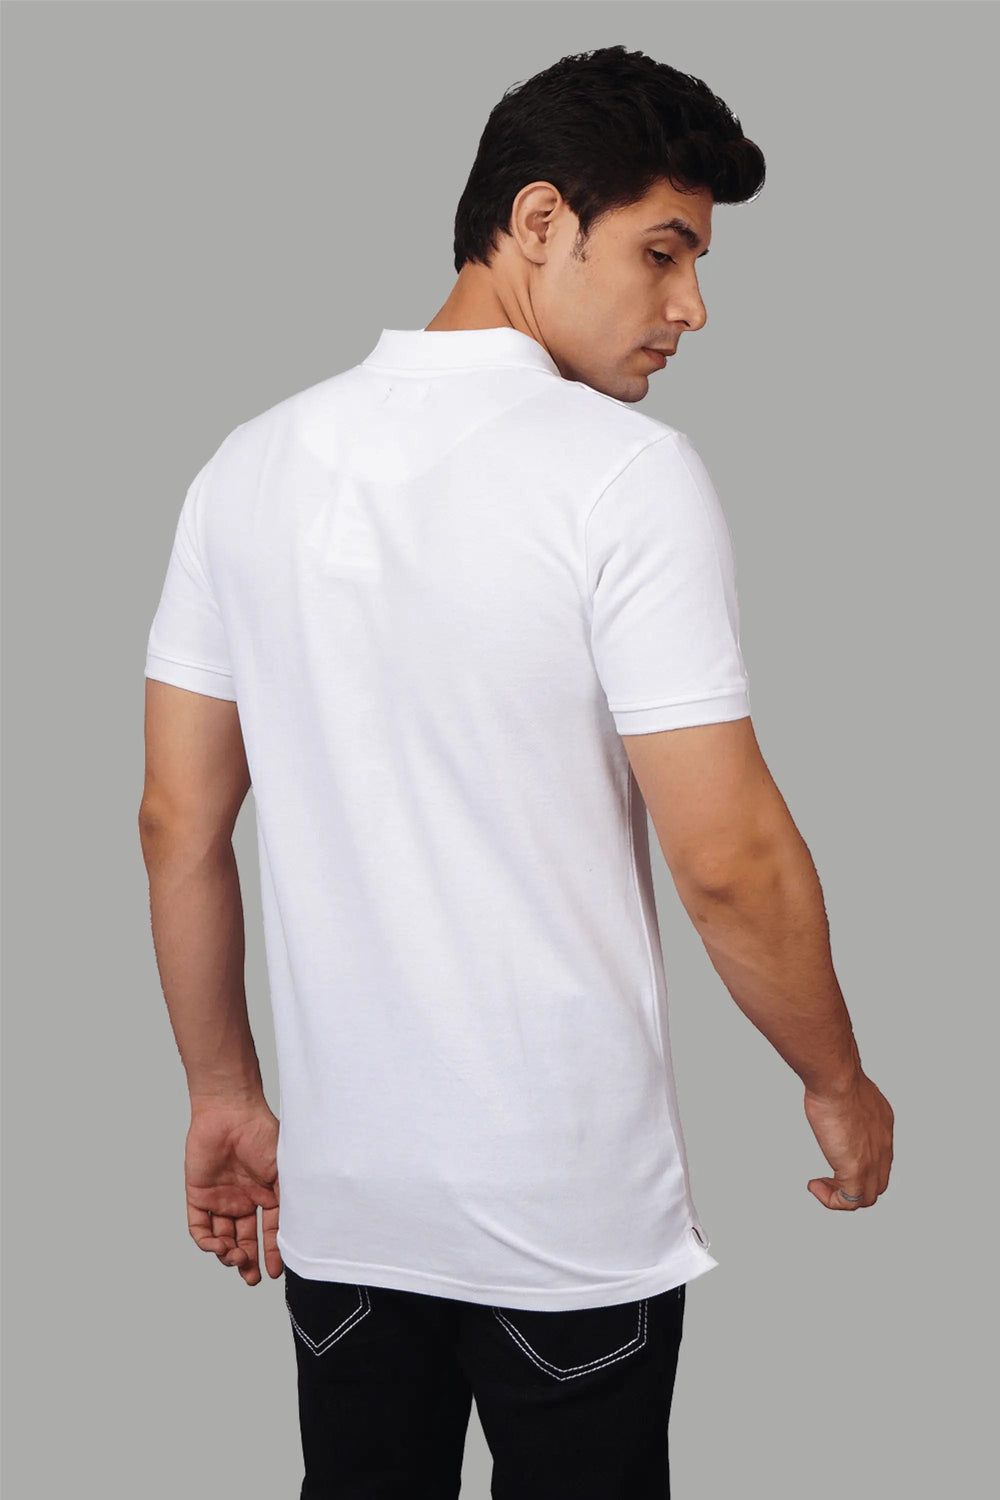 Men's Polo Neck White Cotton T-shirt - Peplos Jeans 